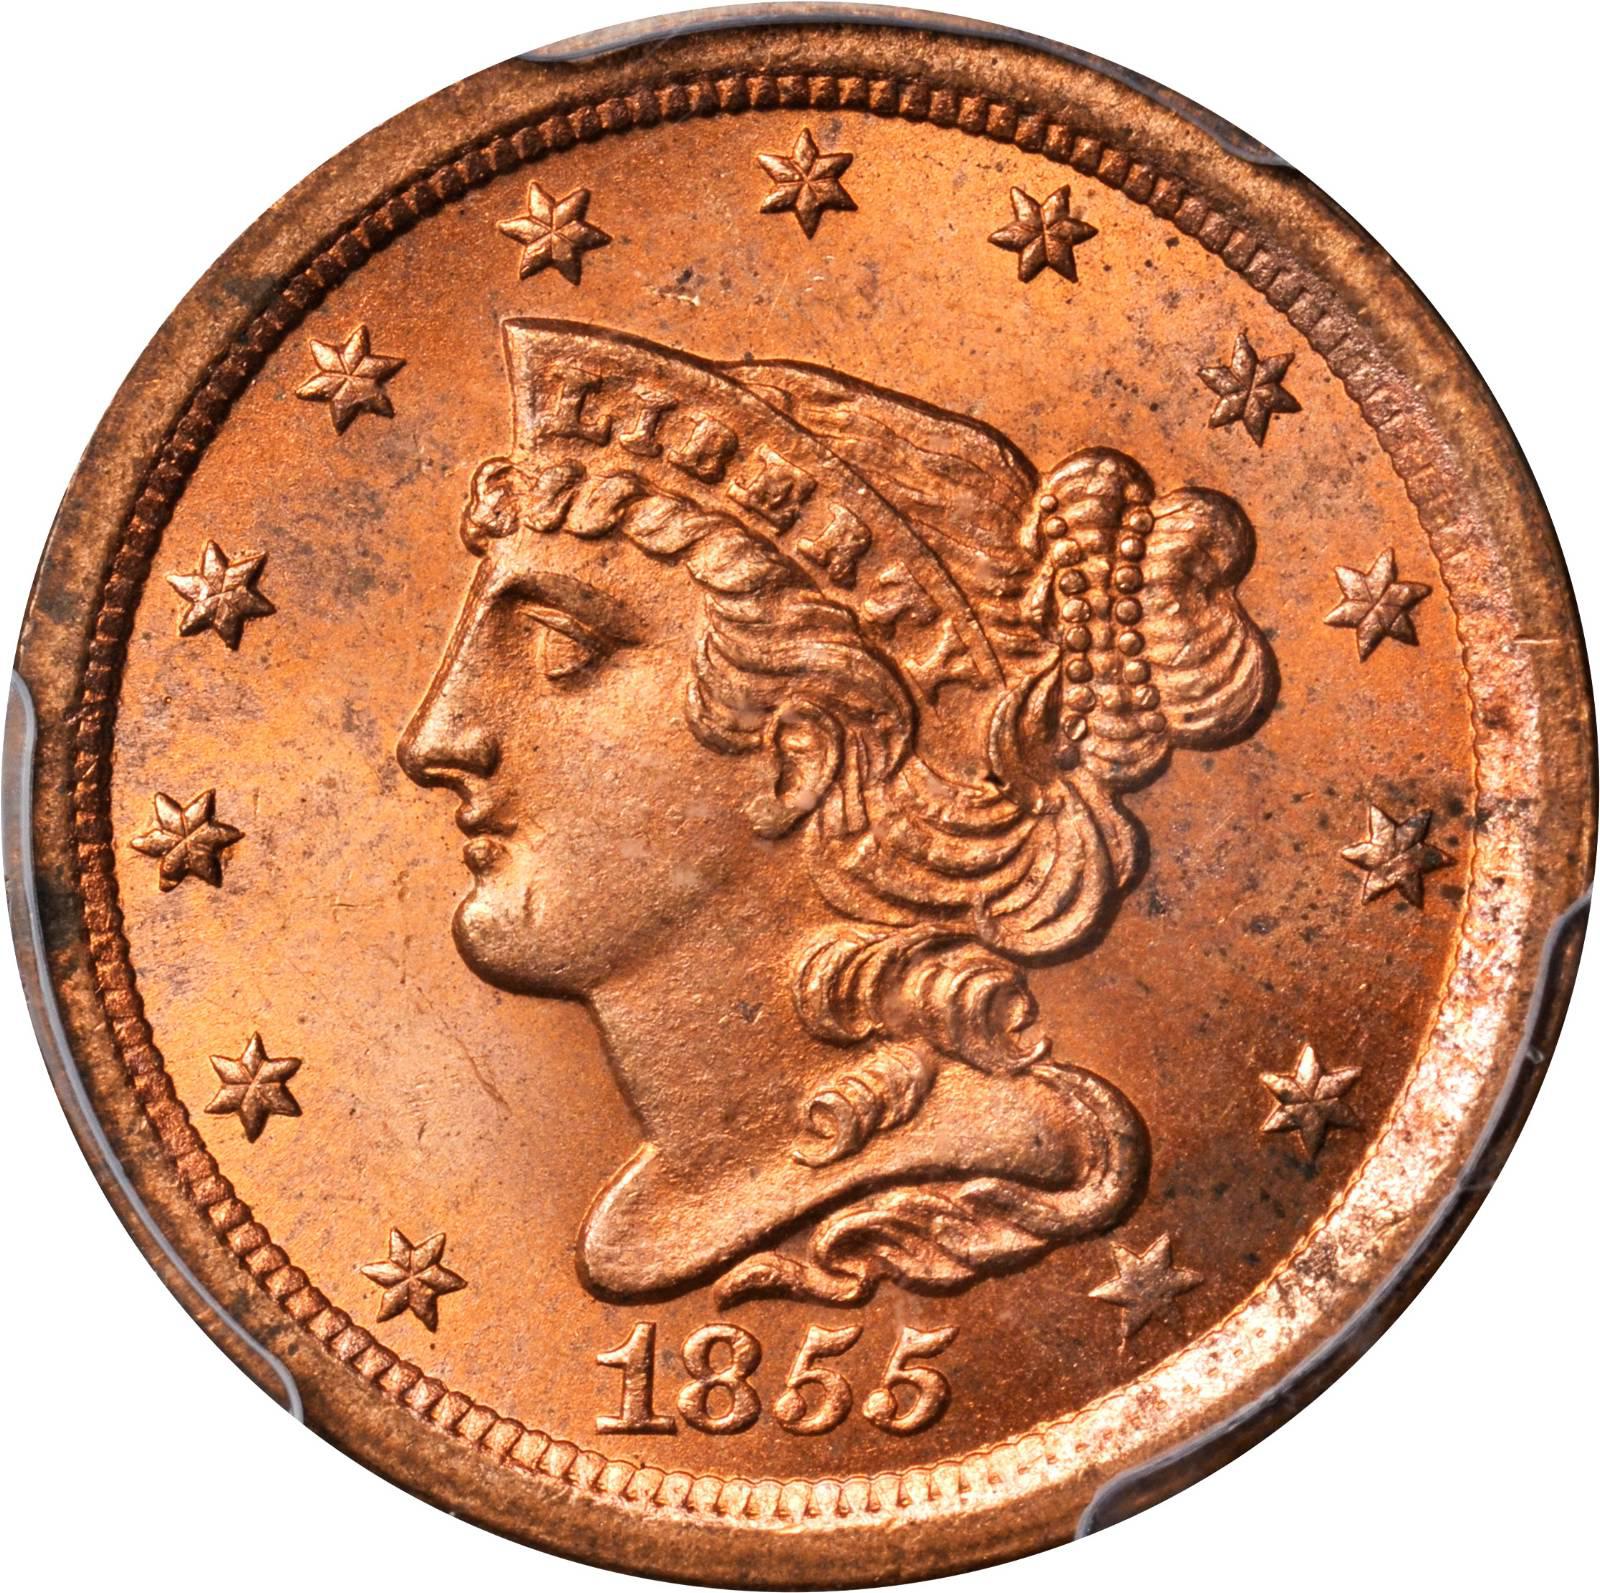 Value of 1855 Braided Hair Half Cent